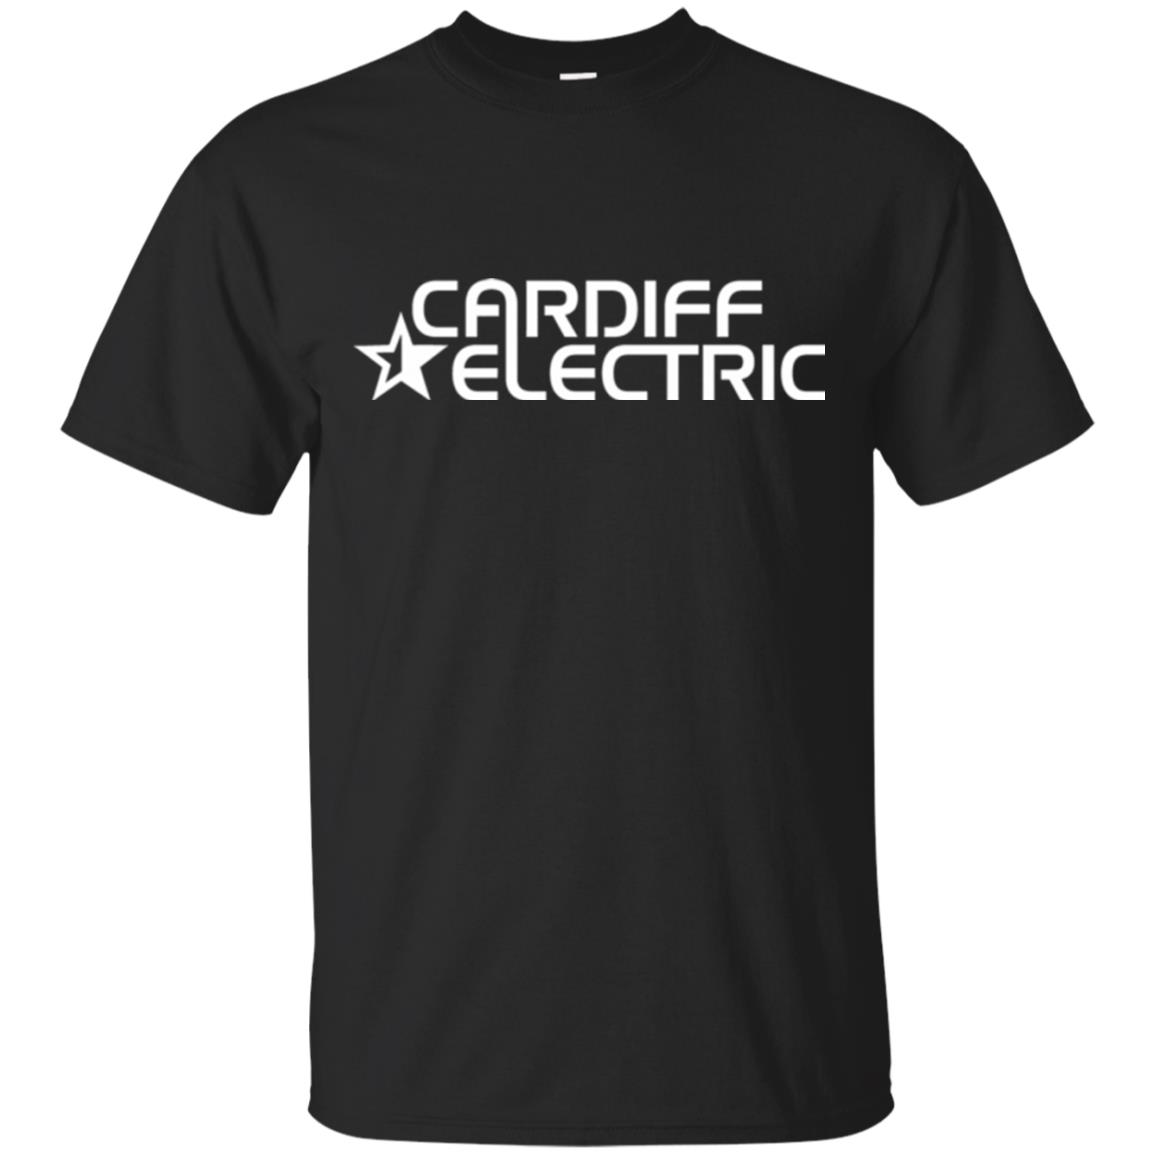 cardiff electric shirt - black